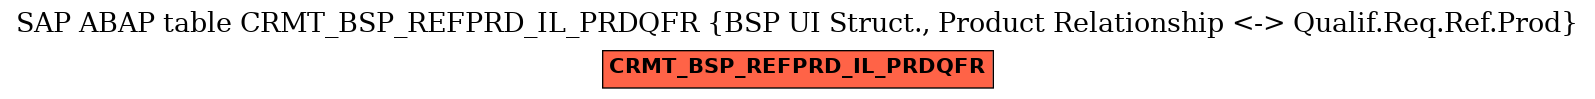 E-R Diagram for table CRMT_BSP_REFPRD_IL_PRDQFR (BSP UI Struct., Product Relationship <-> Qualif.Req.Ref.Prod)